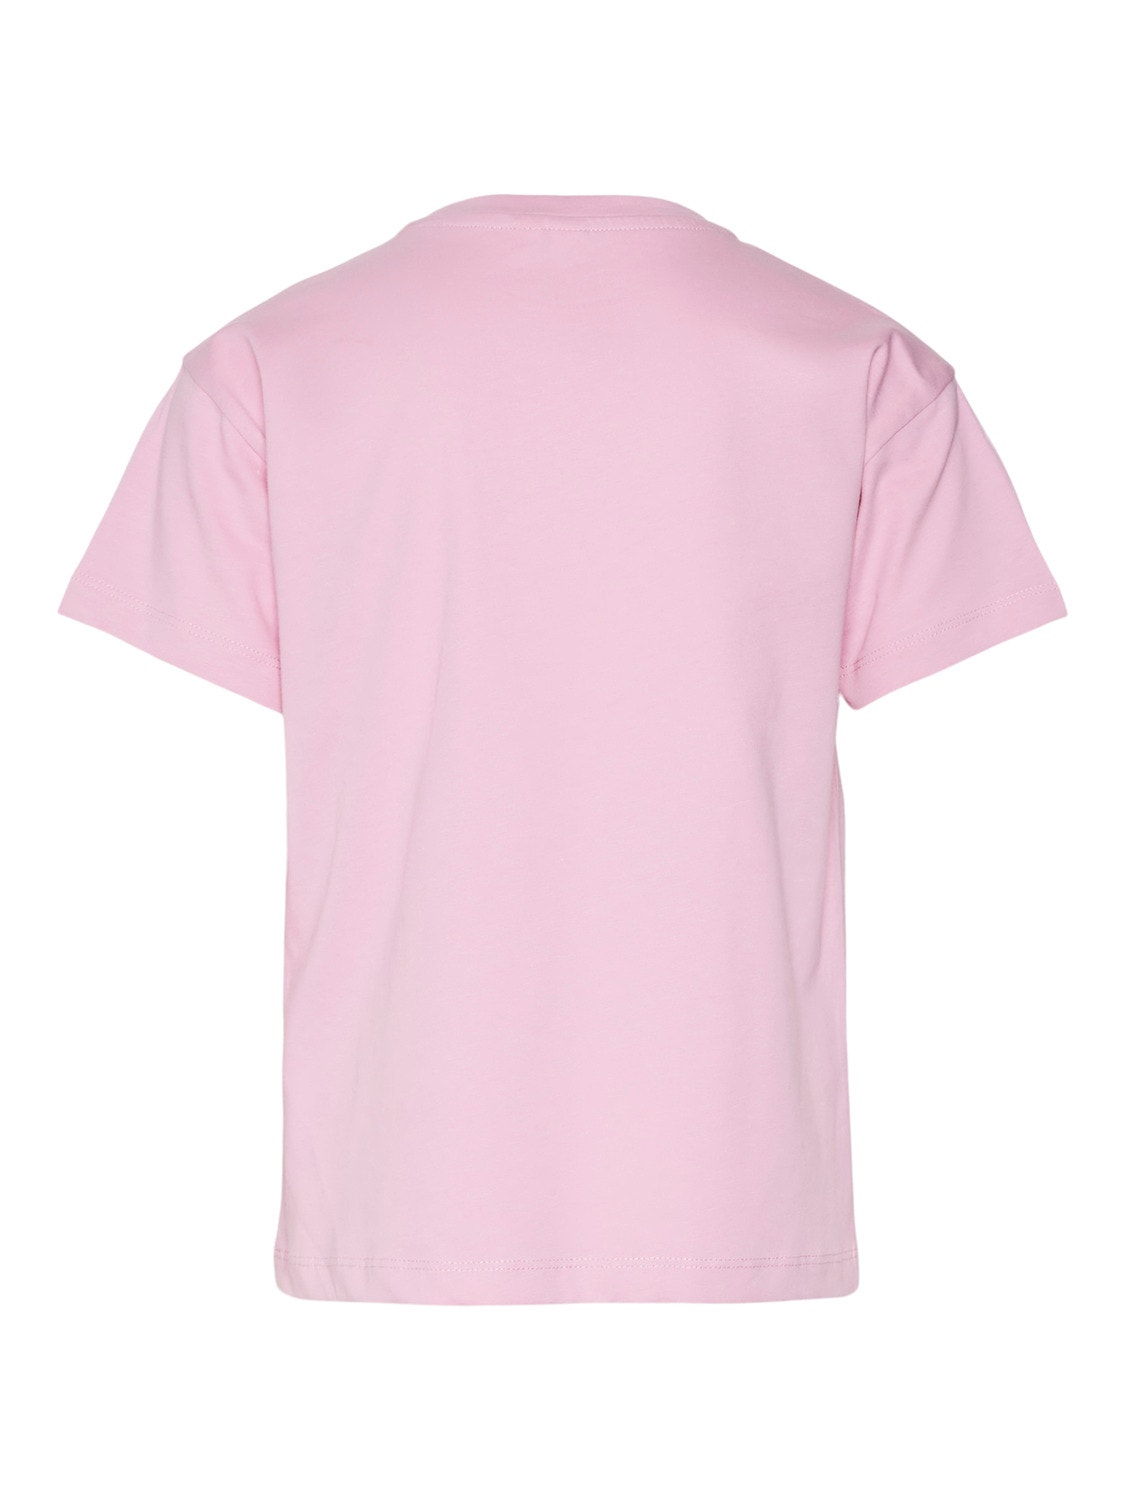 Vero Moda VMFRUITYKELLY T-shirts -Pastel Lavender - 10305183